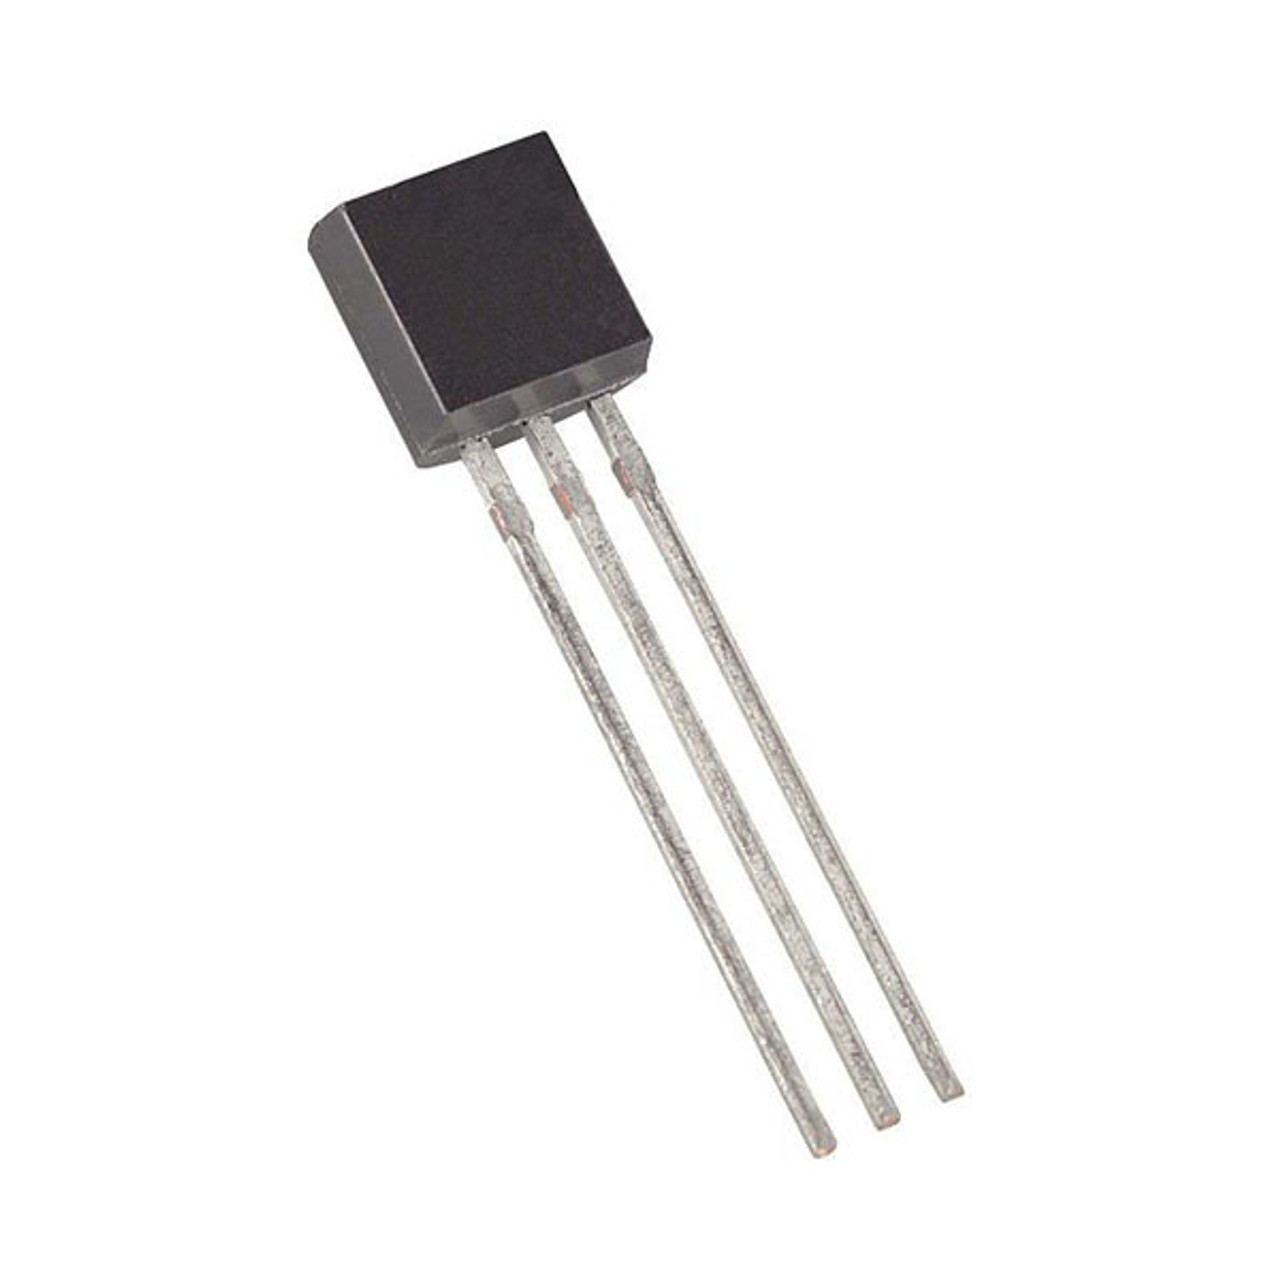 DS18B20 Digital Temperature Sensor for Arduino - Pack of 5